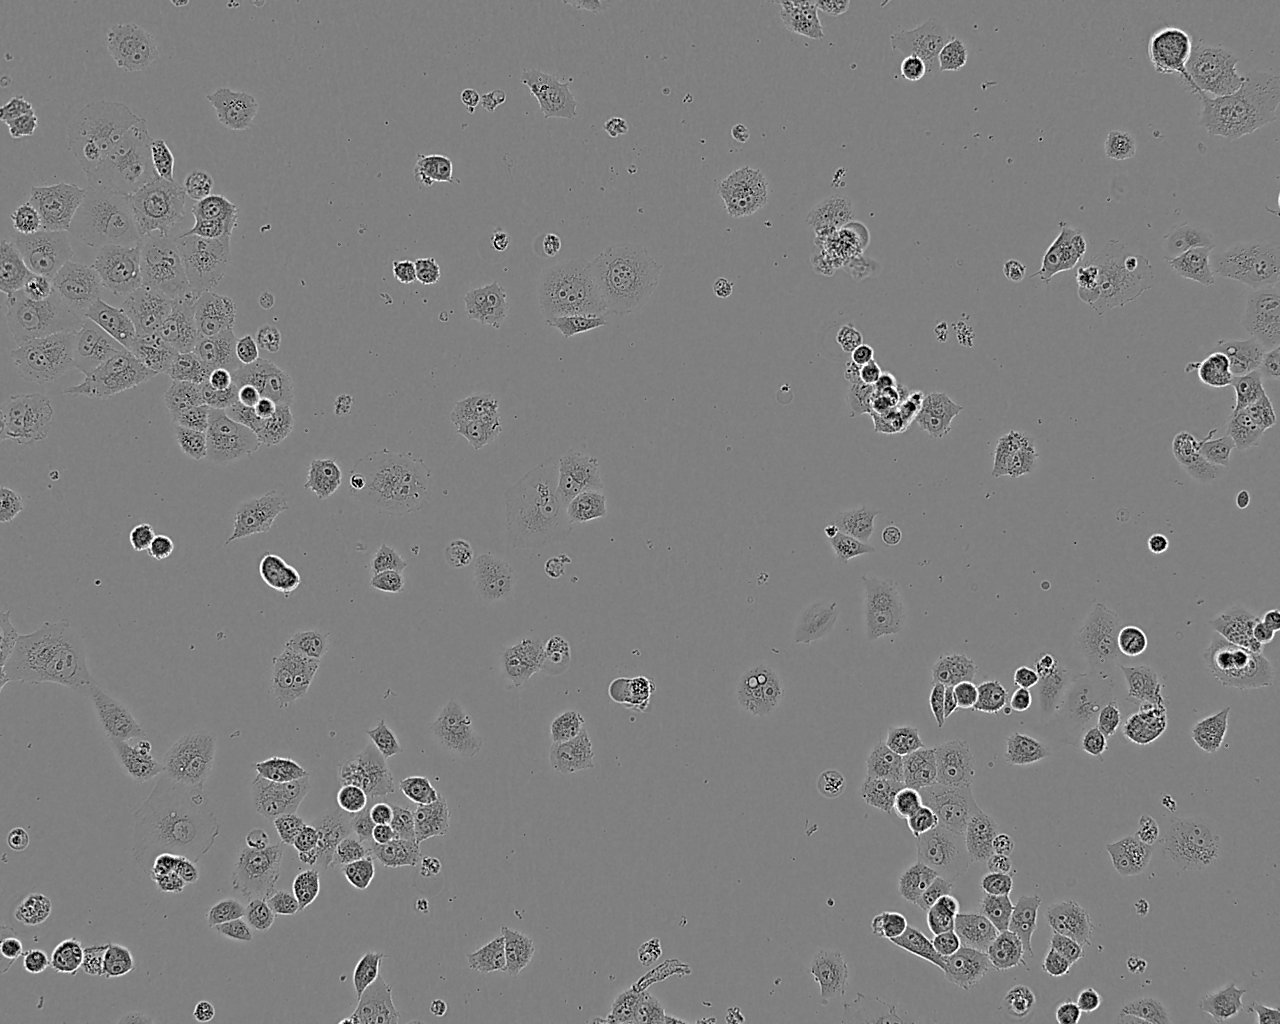 HEK293-FT Epithelial Cell|表达SV40T抗原人胚肾上皮传代细胞(有STR鉴定),HEK293-FT Epithelial Cell